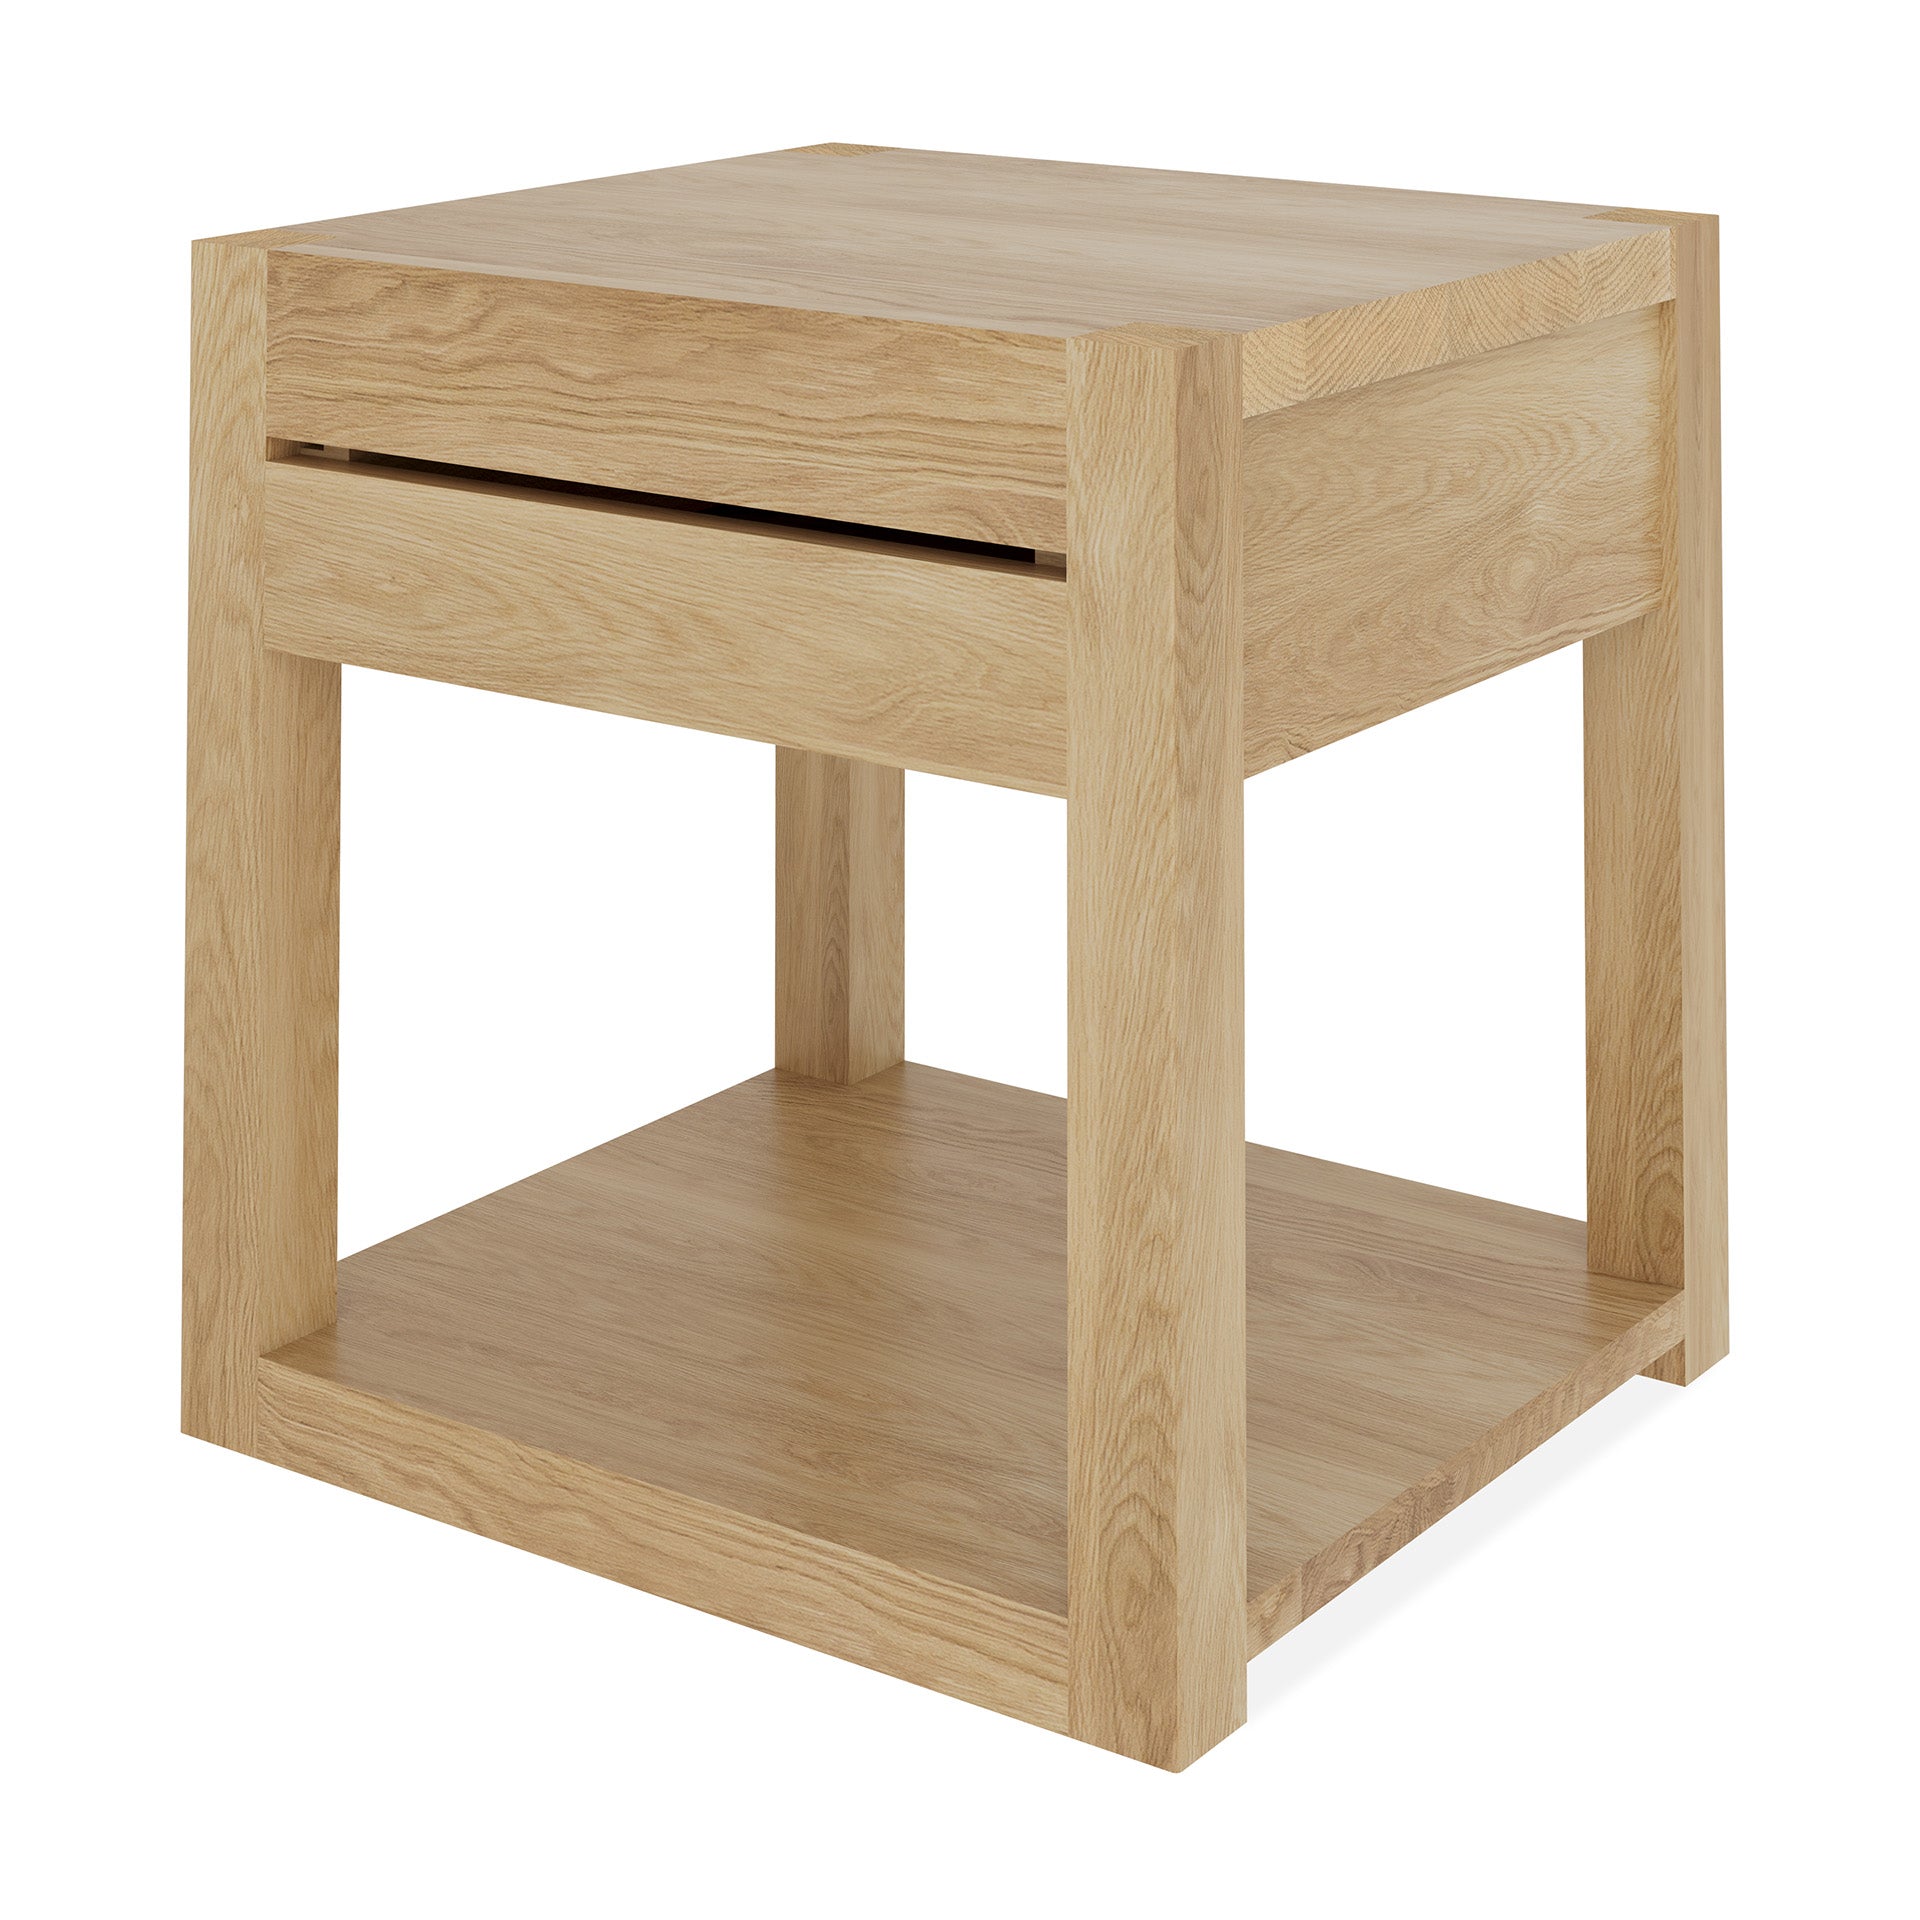 Azur Solid Oak Bedside Table